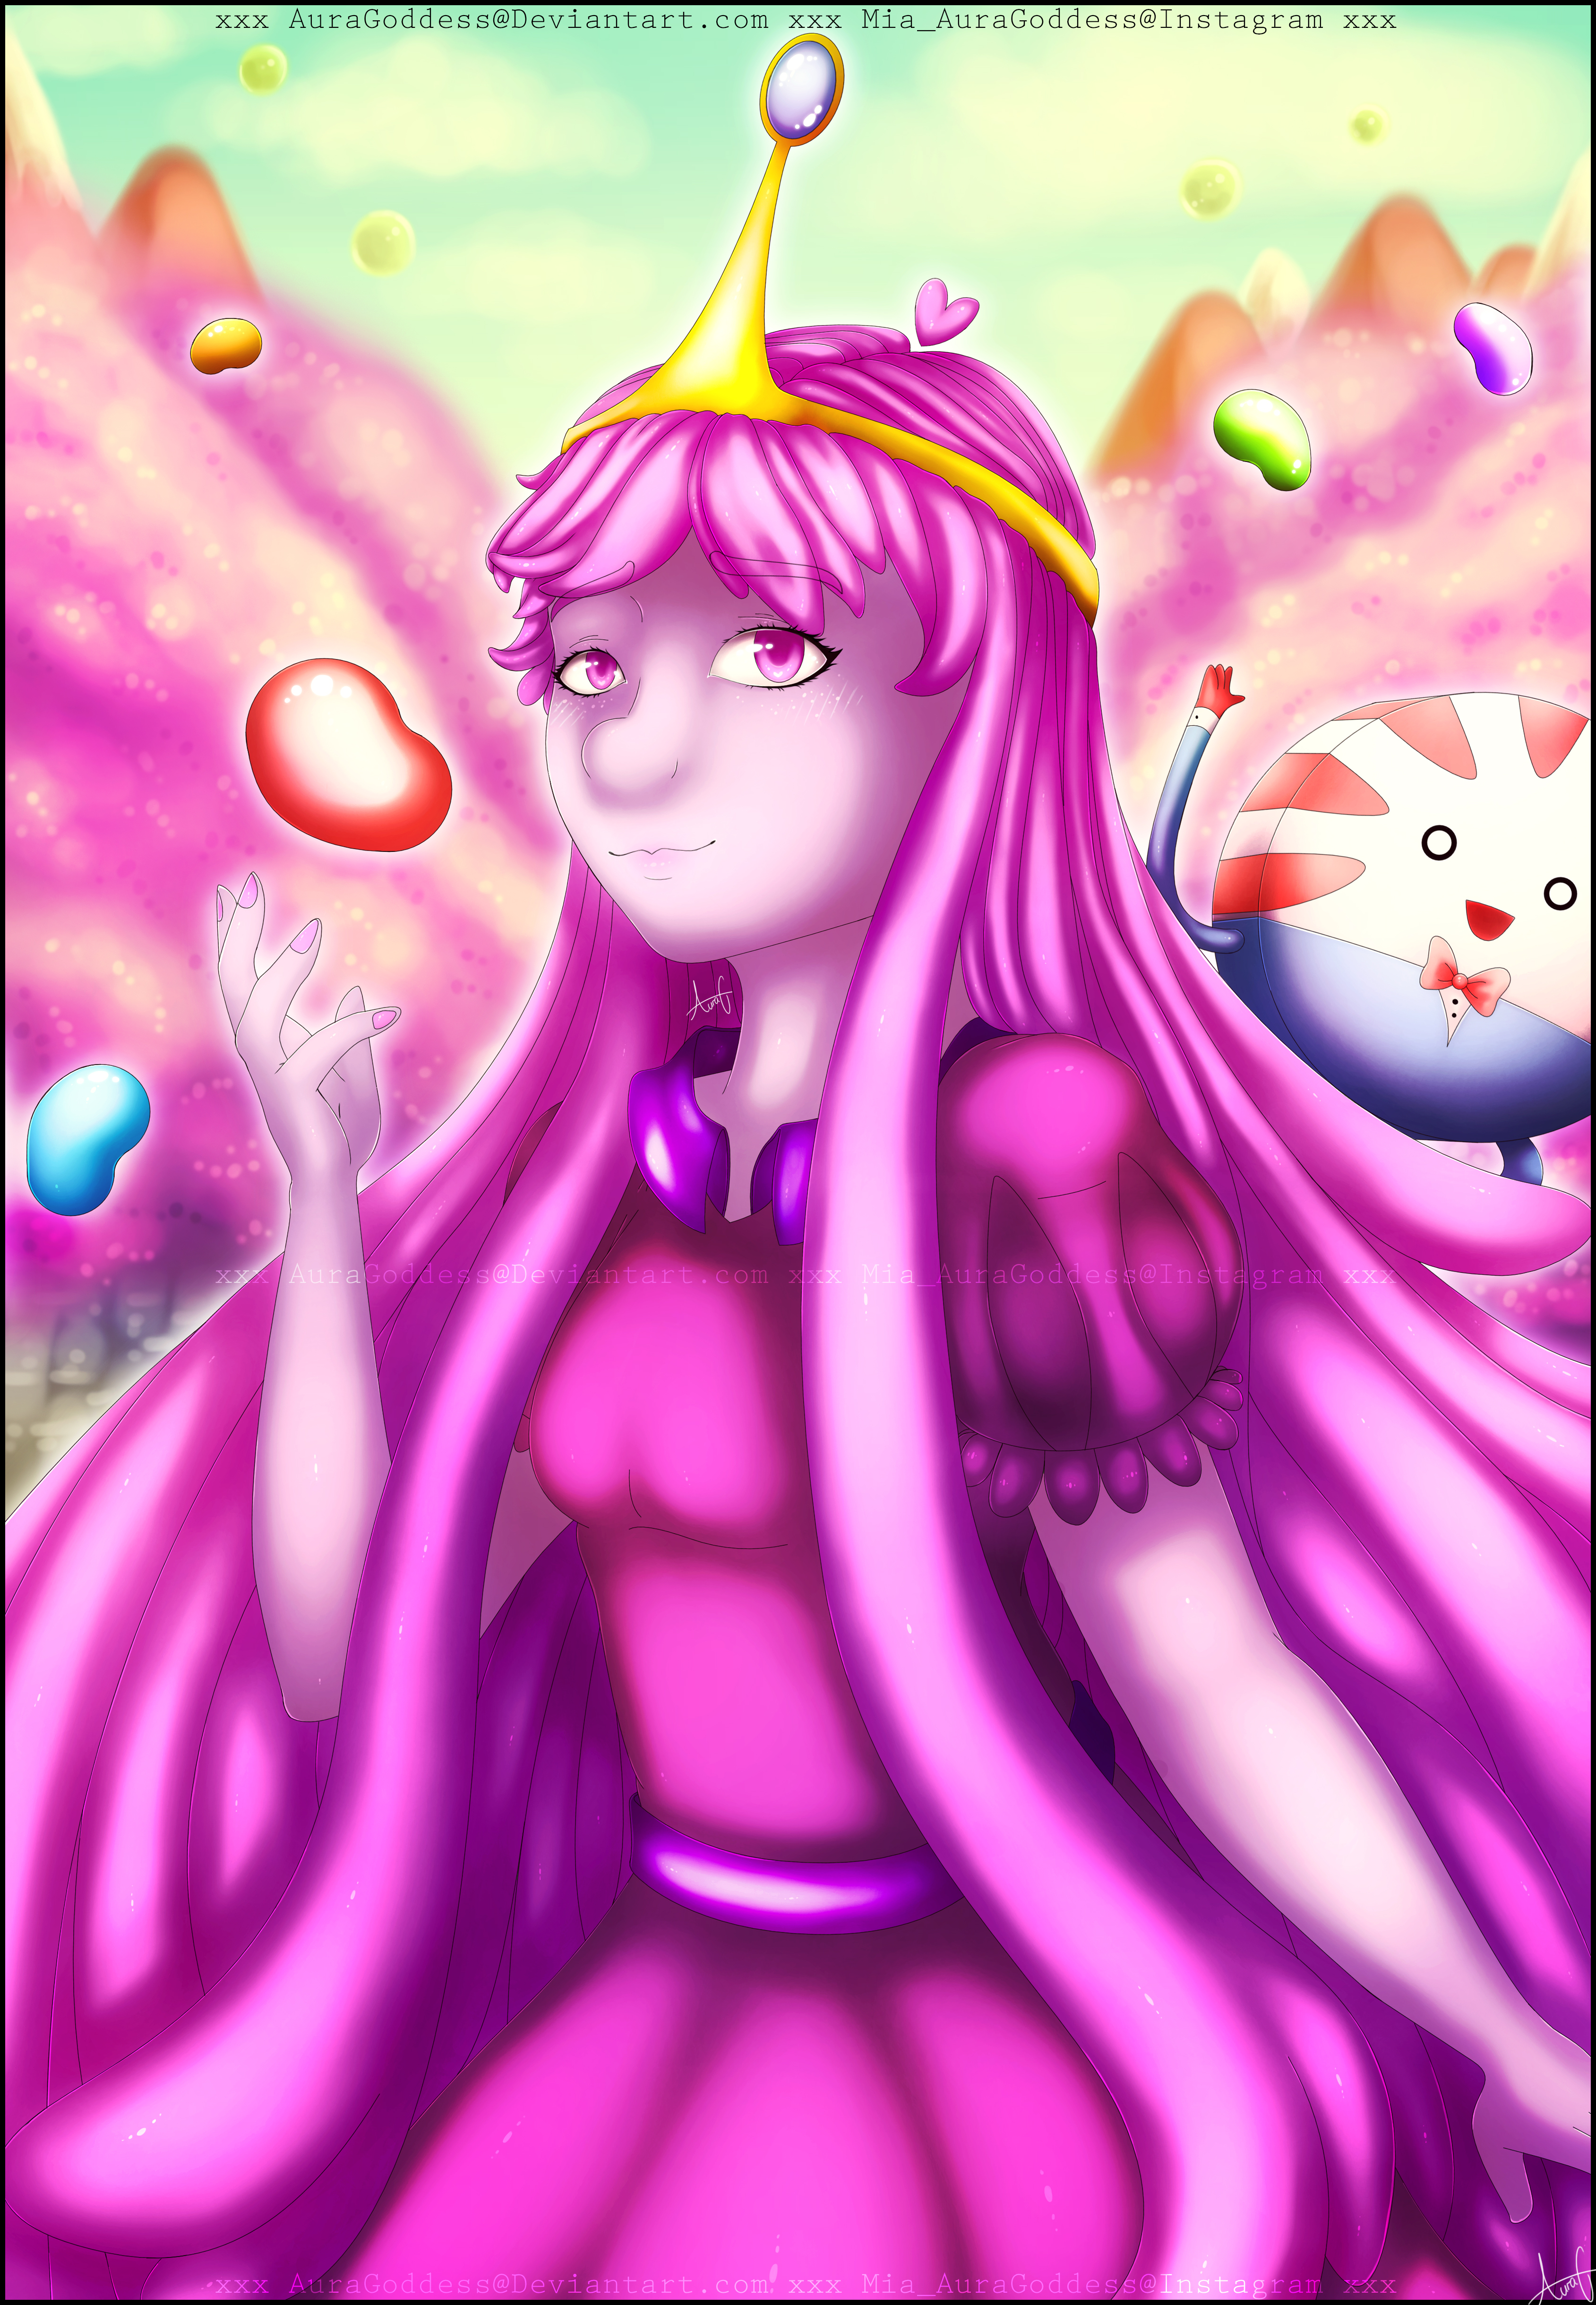 Images of princess bubblegum